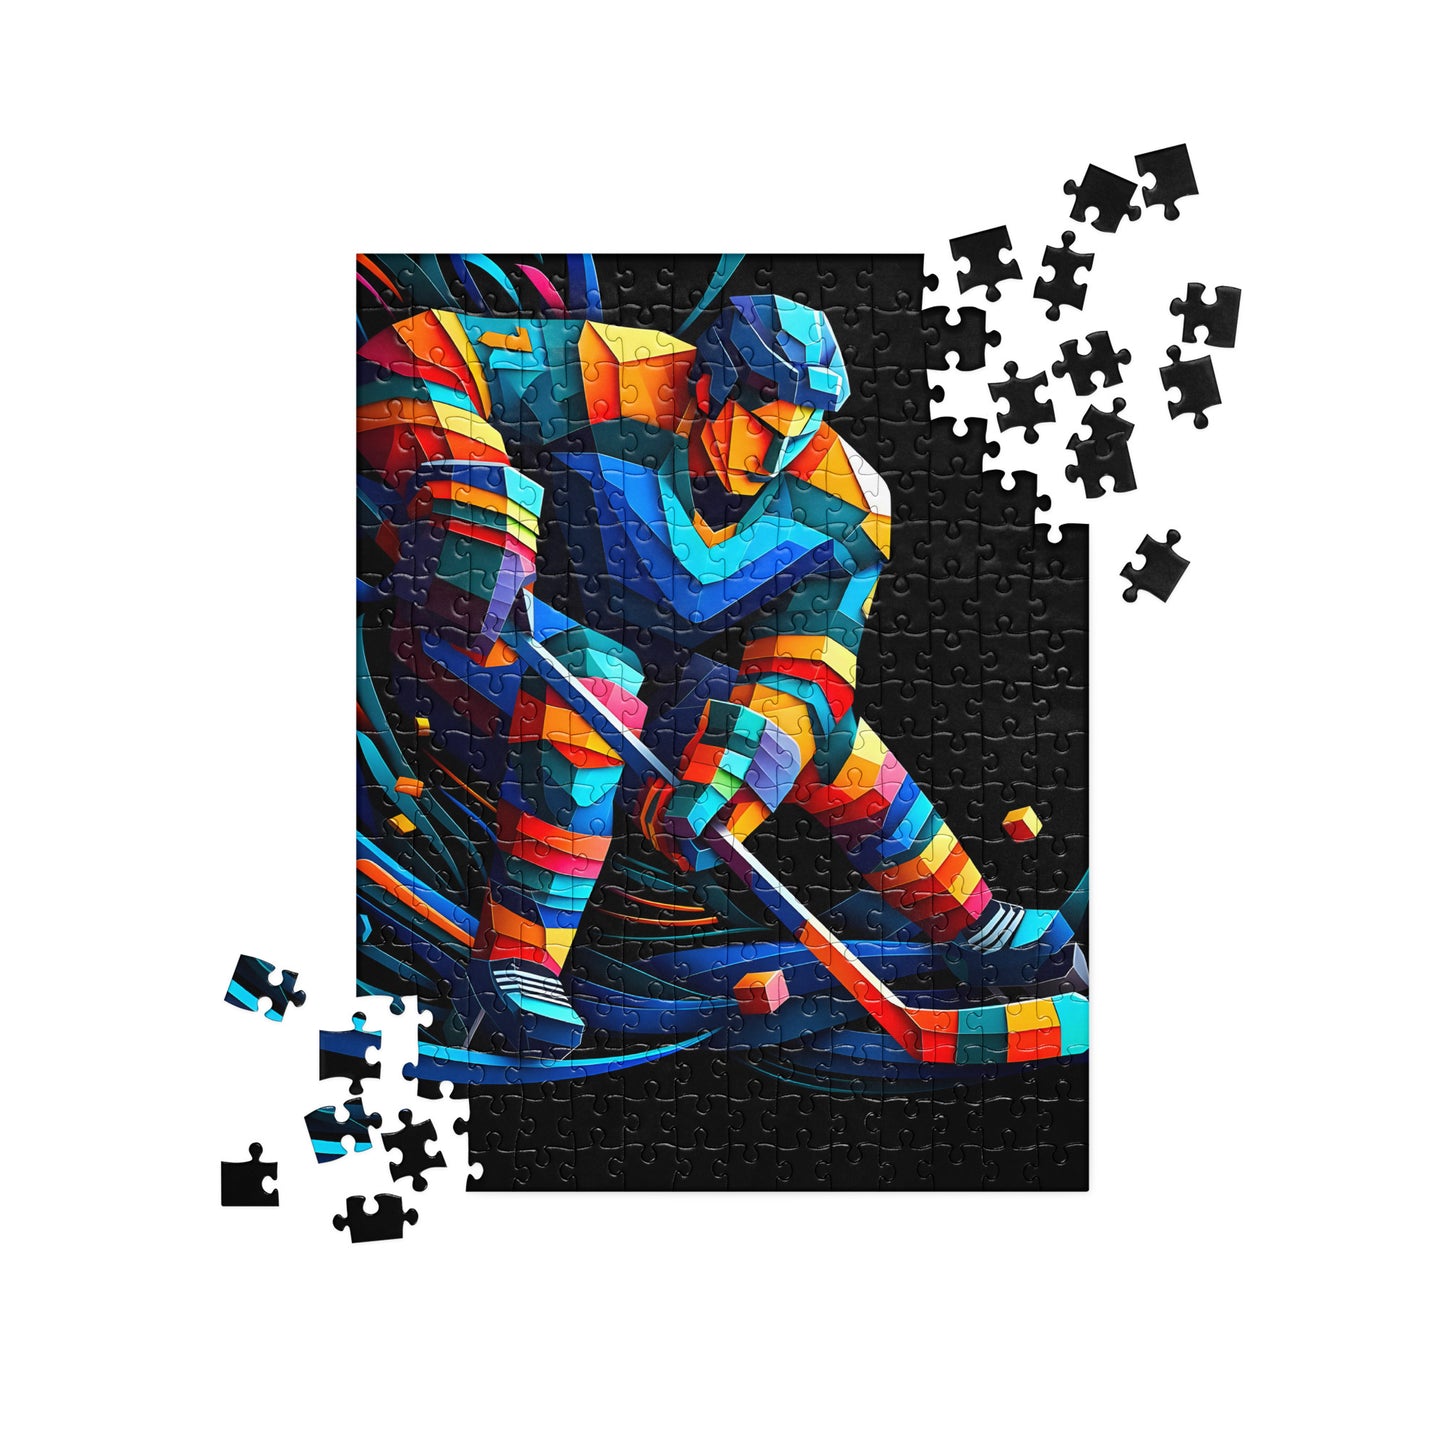 3D Ice Hockey Player - Jigsaw Puzzle #3